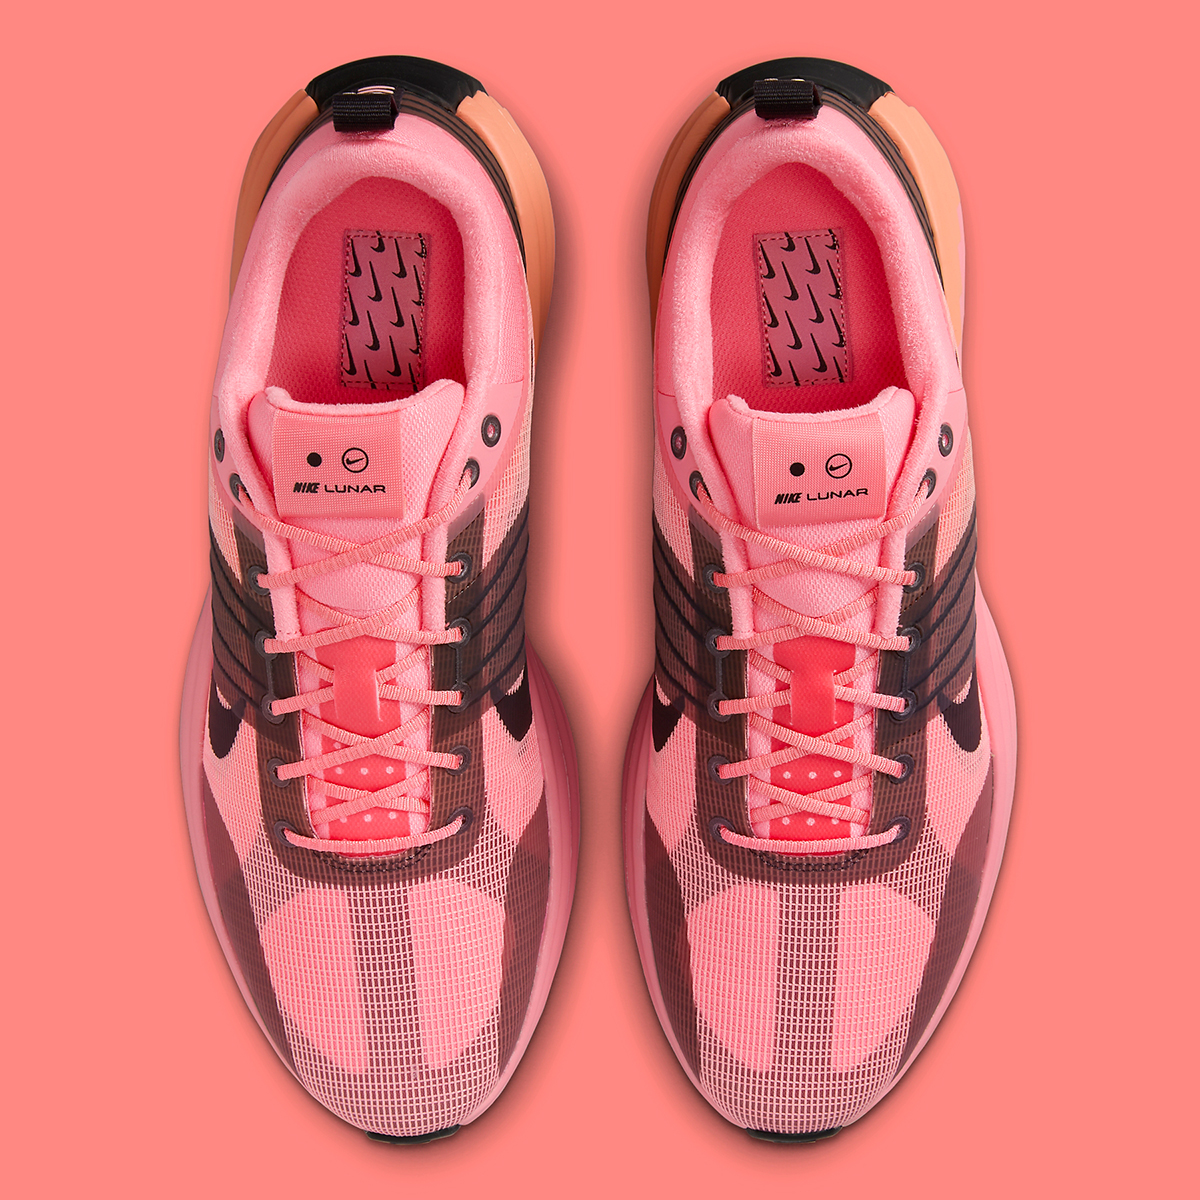 nike control janoski dark grey mint online shop shoes Pink Sherbet Hf4314 699 8